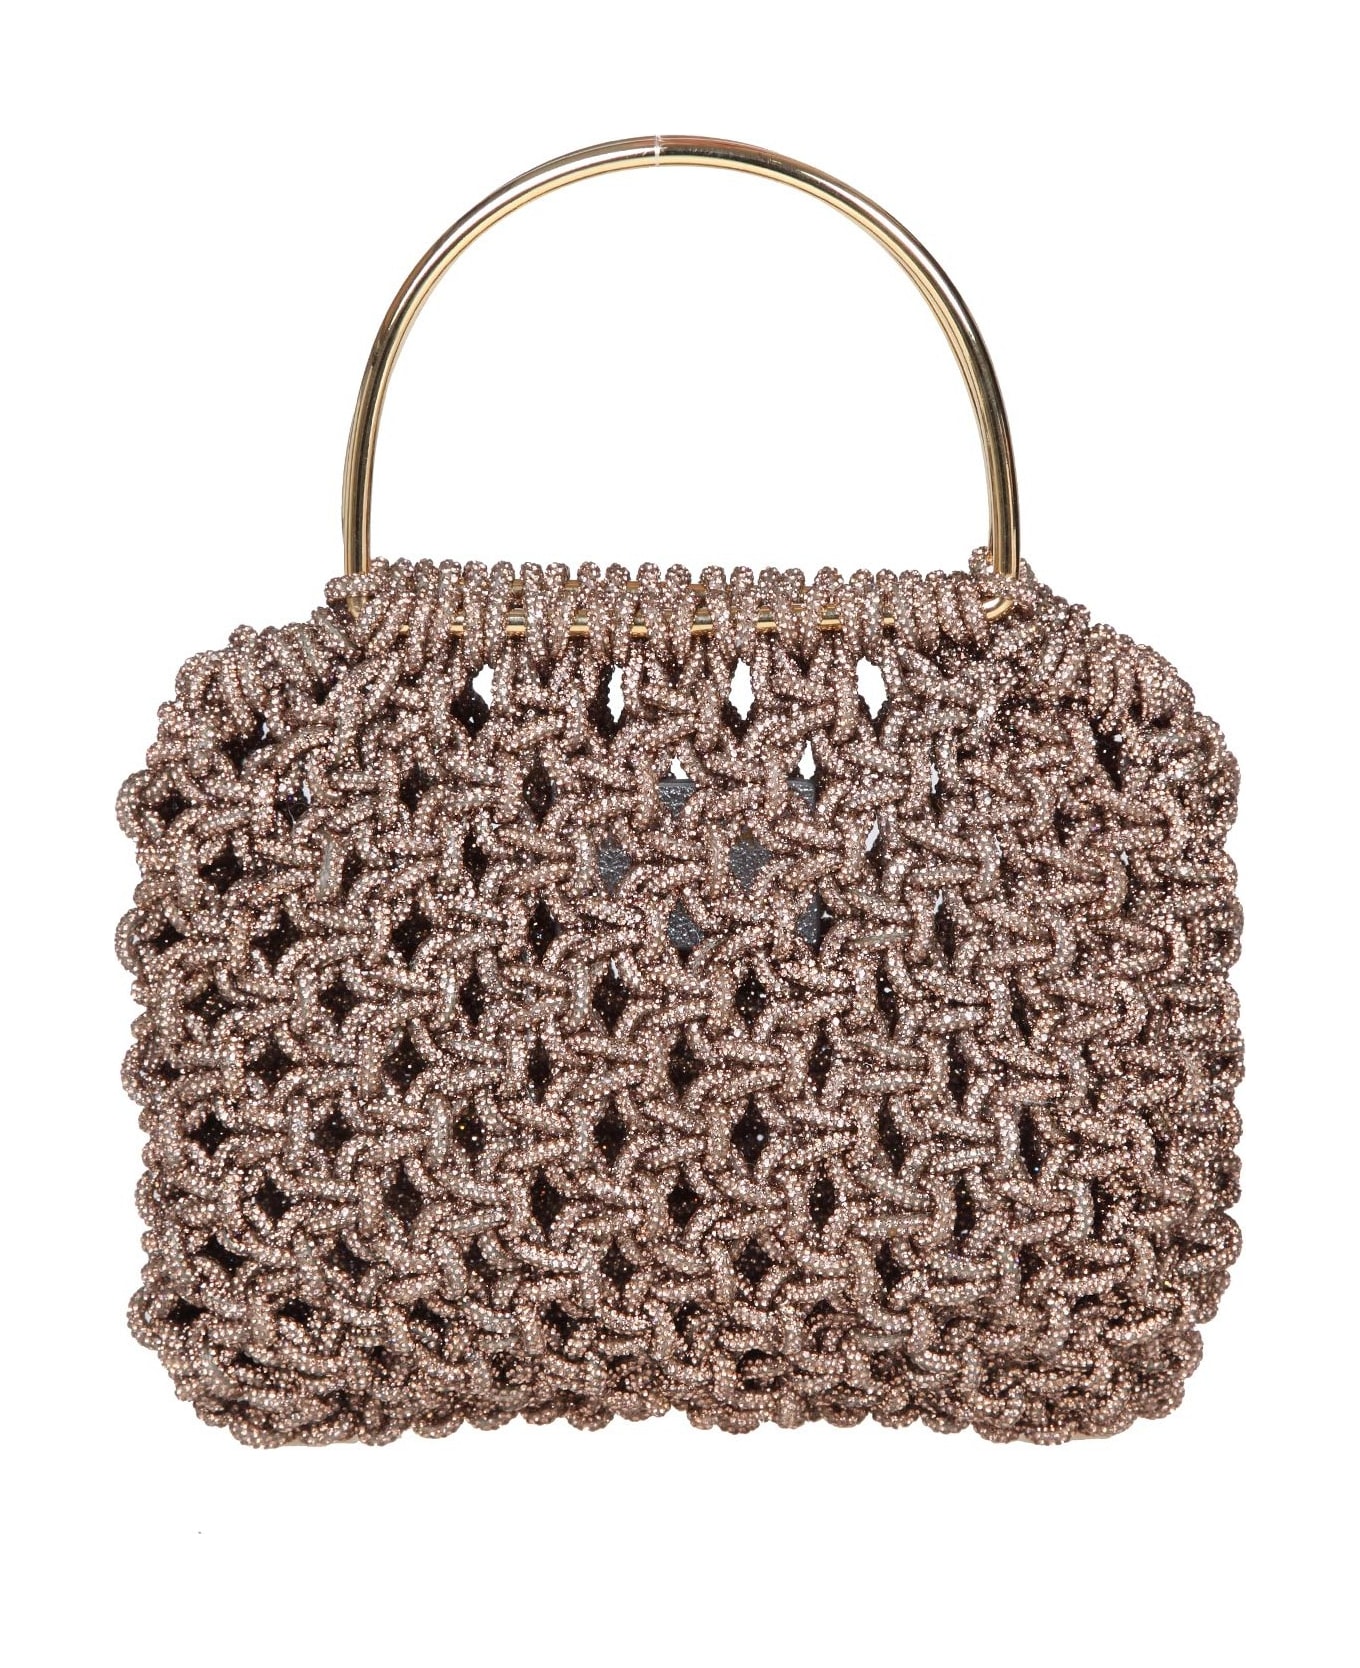 Hibourama Jewelry Handbag Woven With Crystals - CRYSTALS 